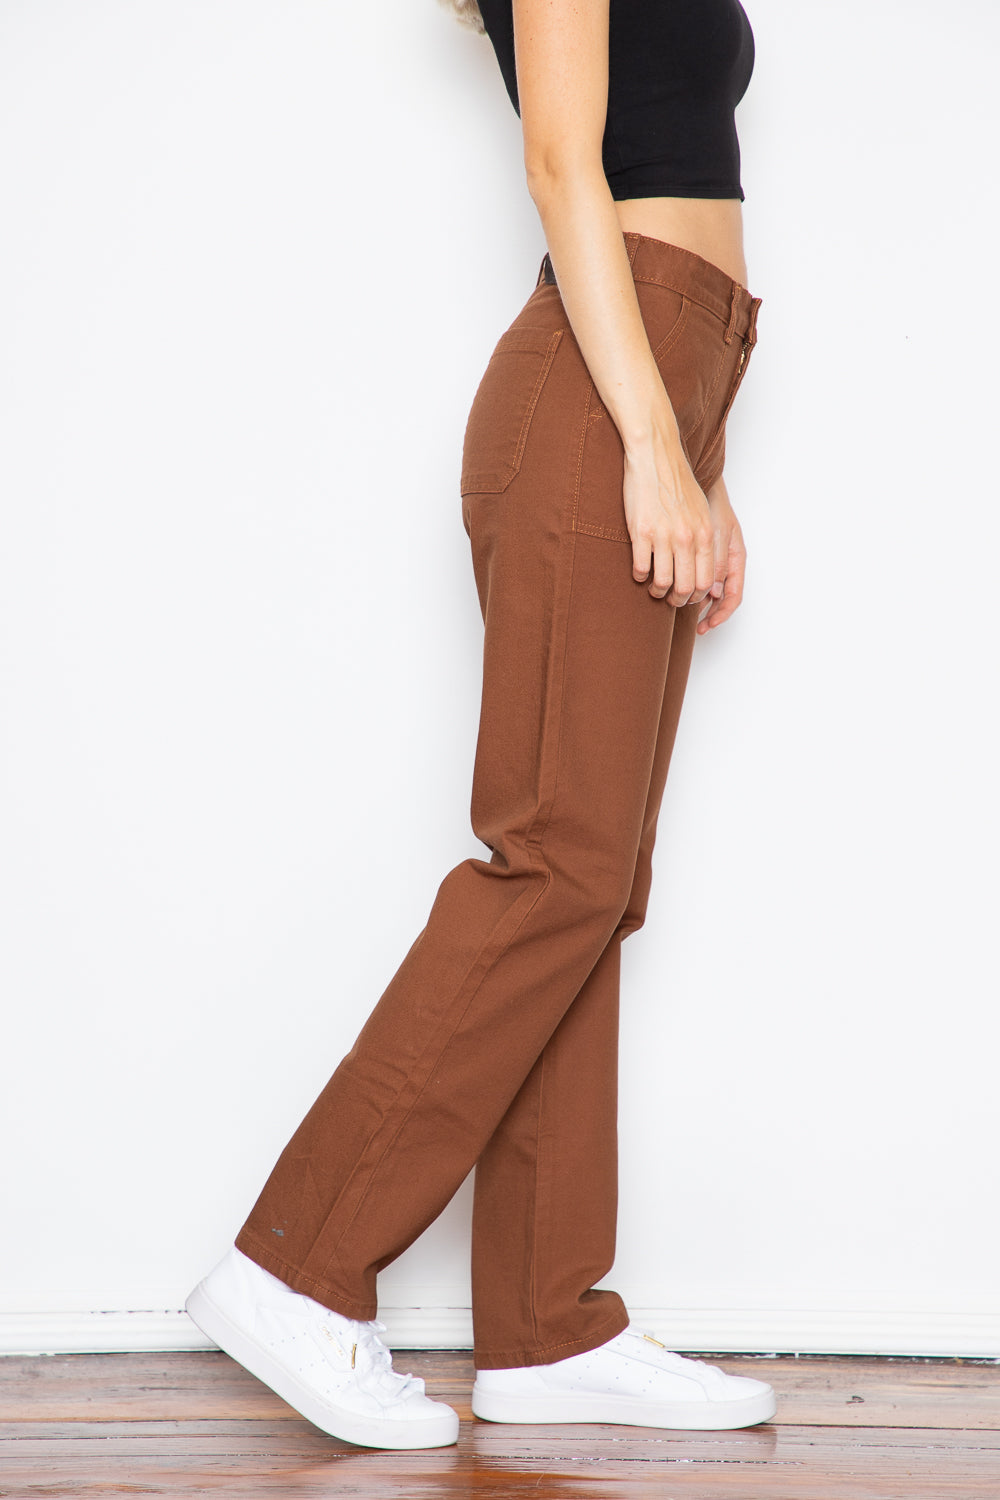 Bebiullo Women Autumn Casual Pants, Solid Color Drawstring Elastic-Waist  Long Trousers with Pockets for Girls,Gray/Black/Dark /Brick Red -  Walmart.com